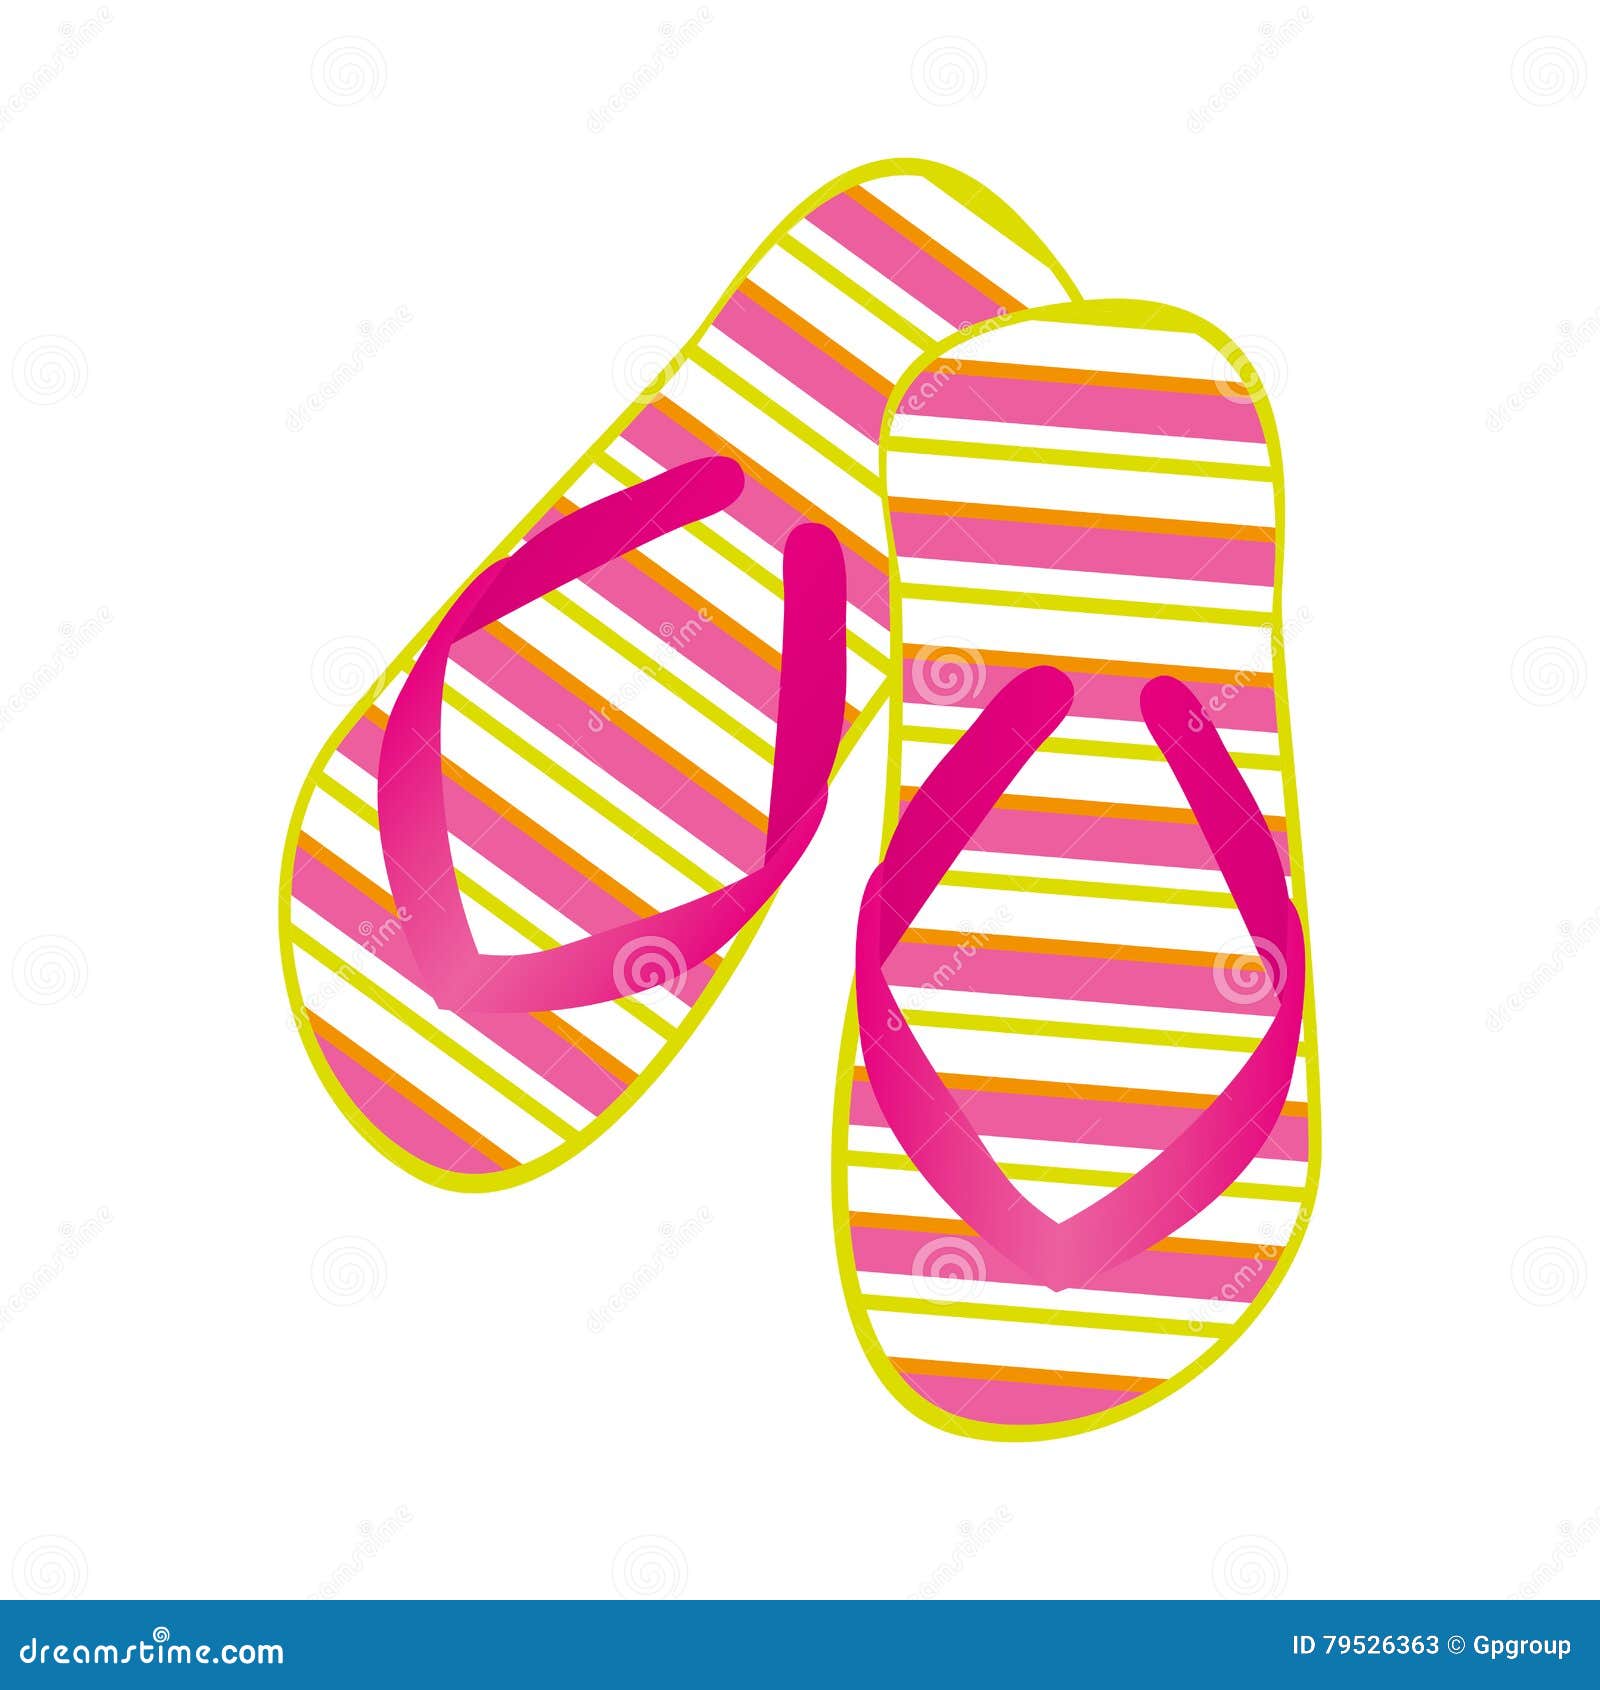 Flip flops icon image stock vector. Illustration of foot - 79526363